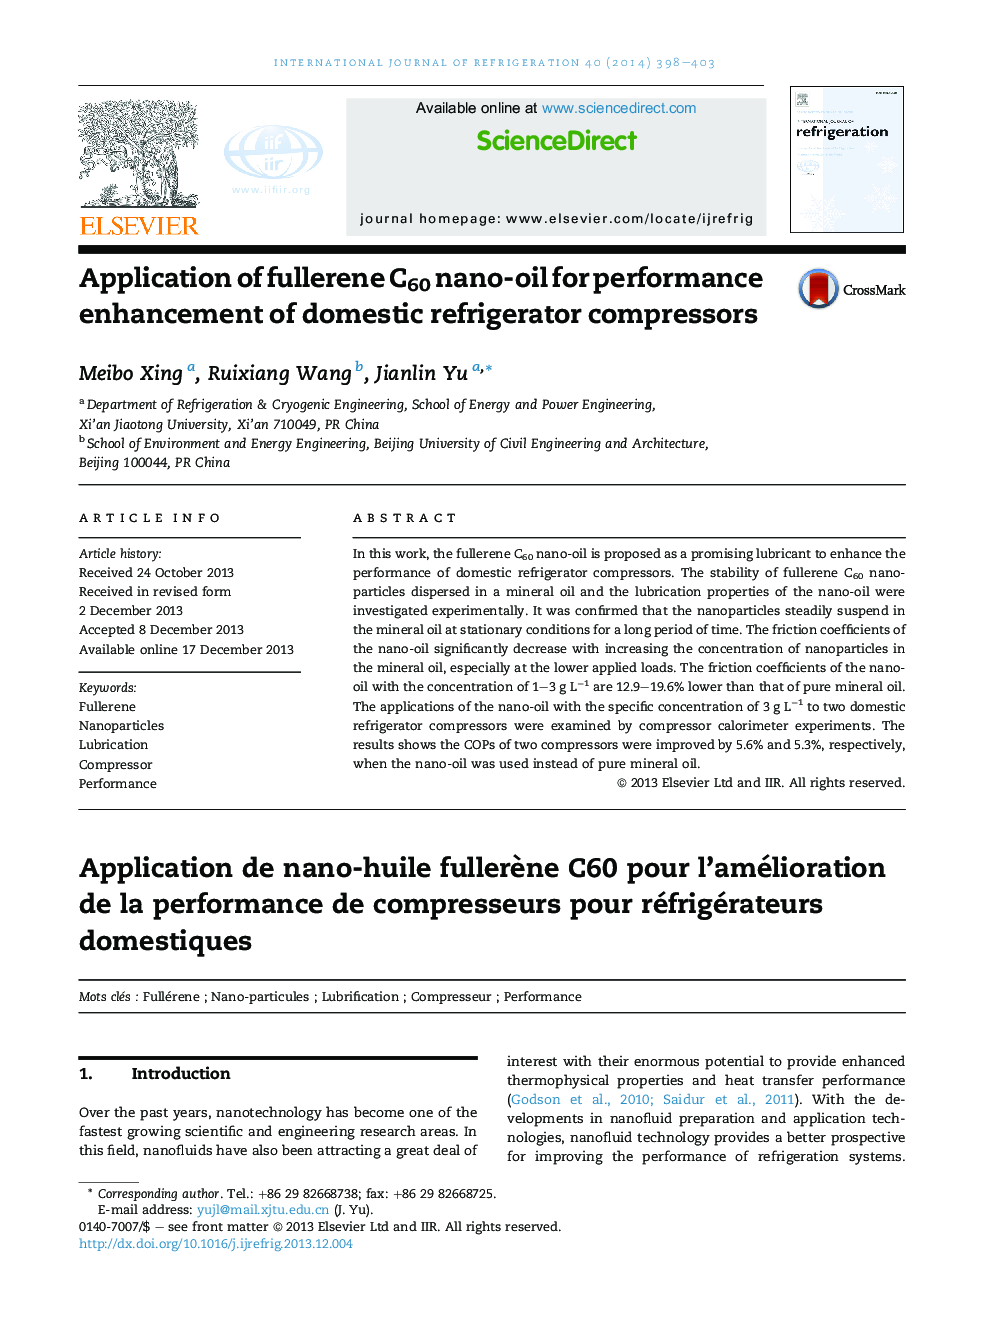 Application of fullerene C60 nano-oil for performance enhancement of domestic refrigerator compressors